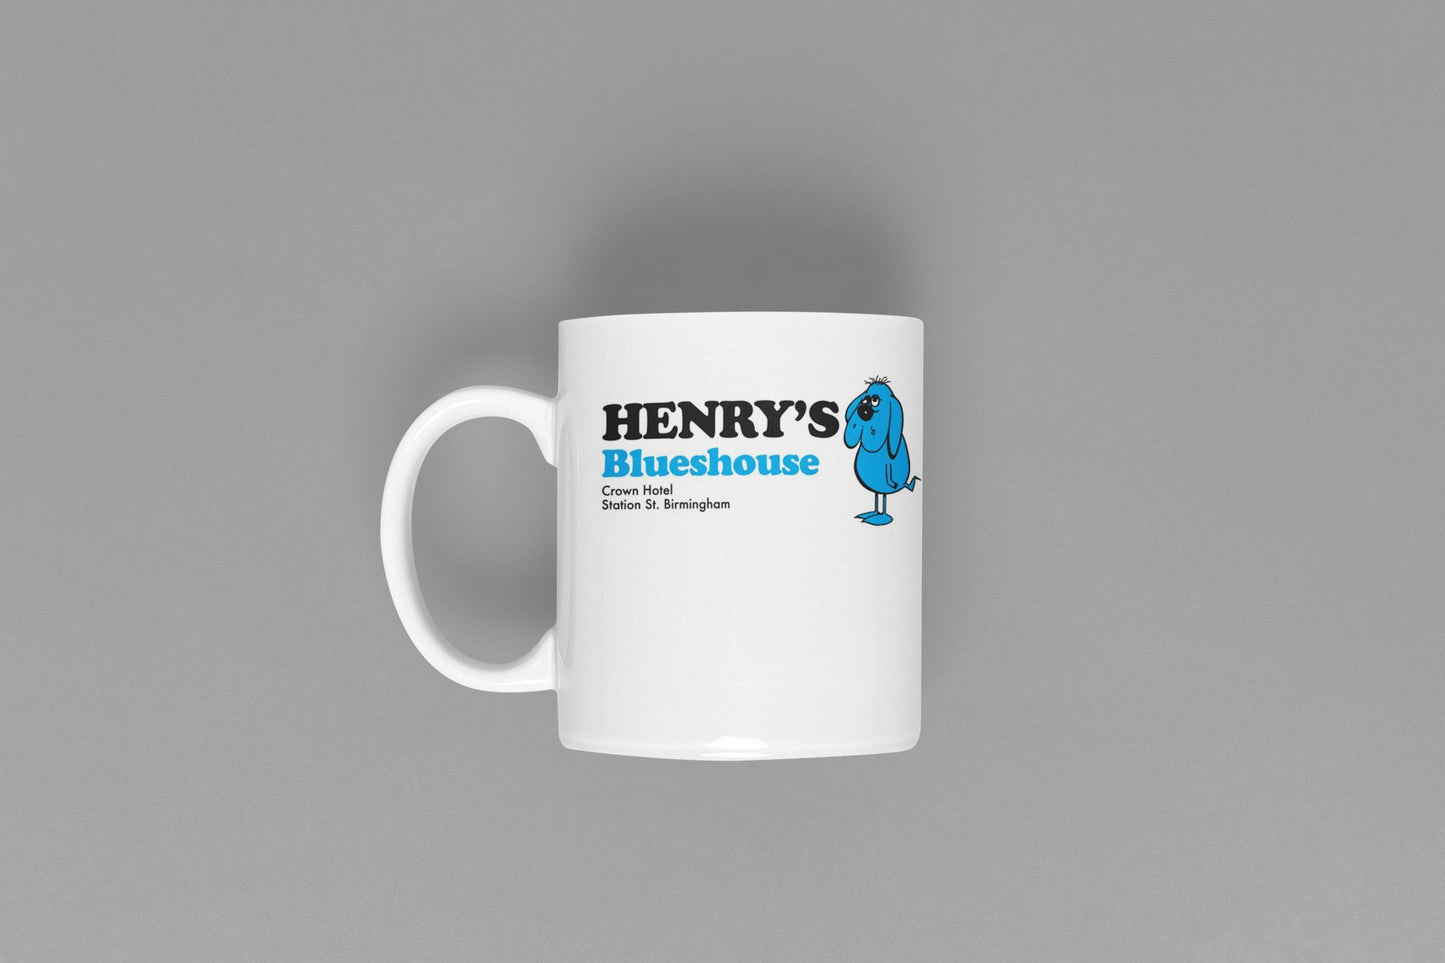 Henry's Blueshouse mug - Dirty Stop Outs